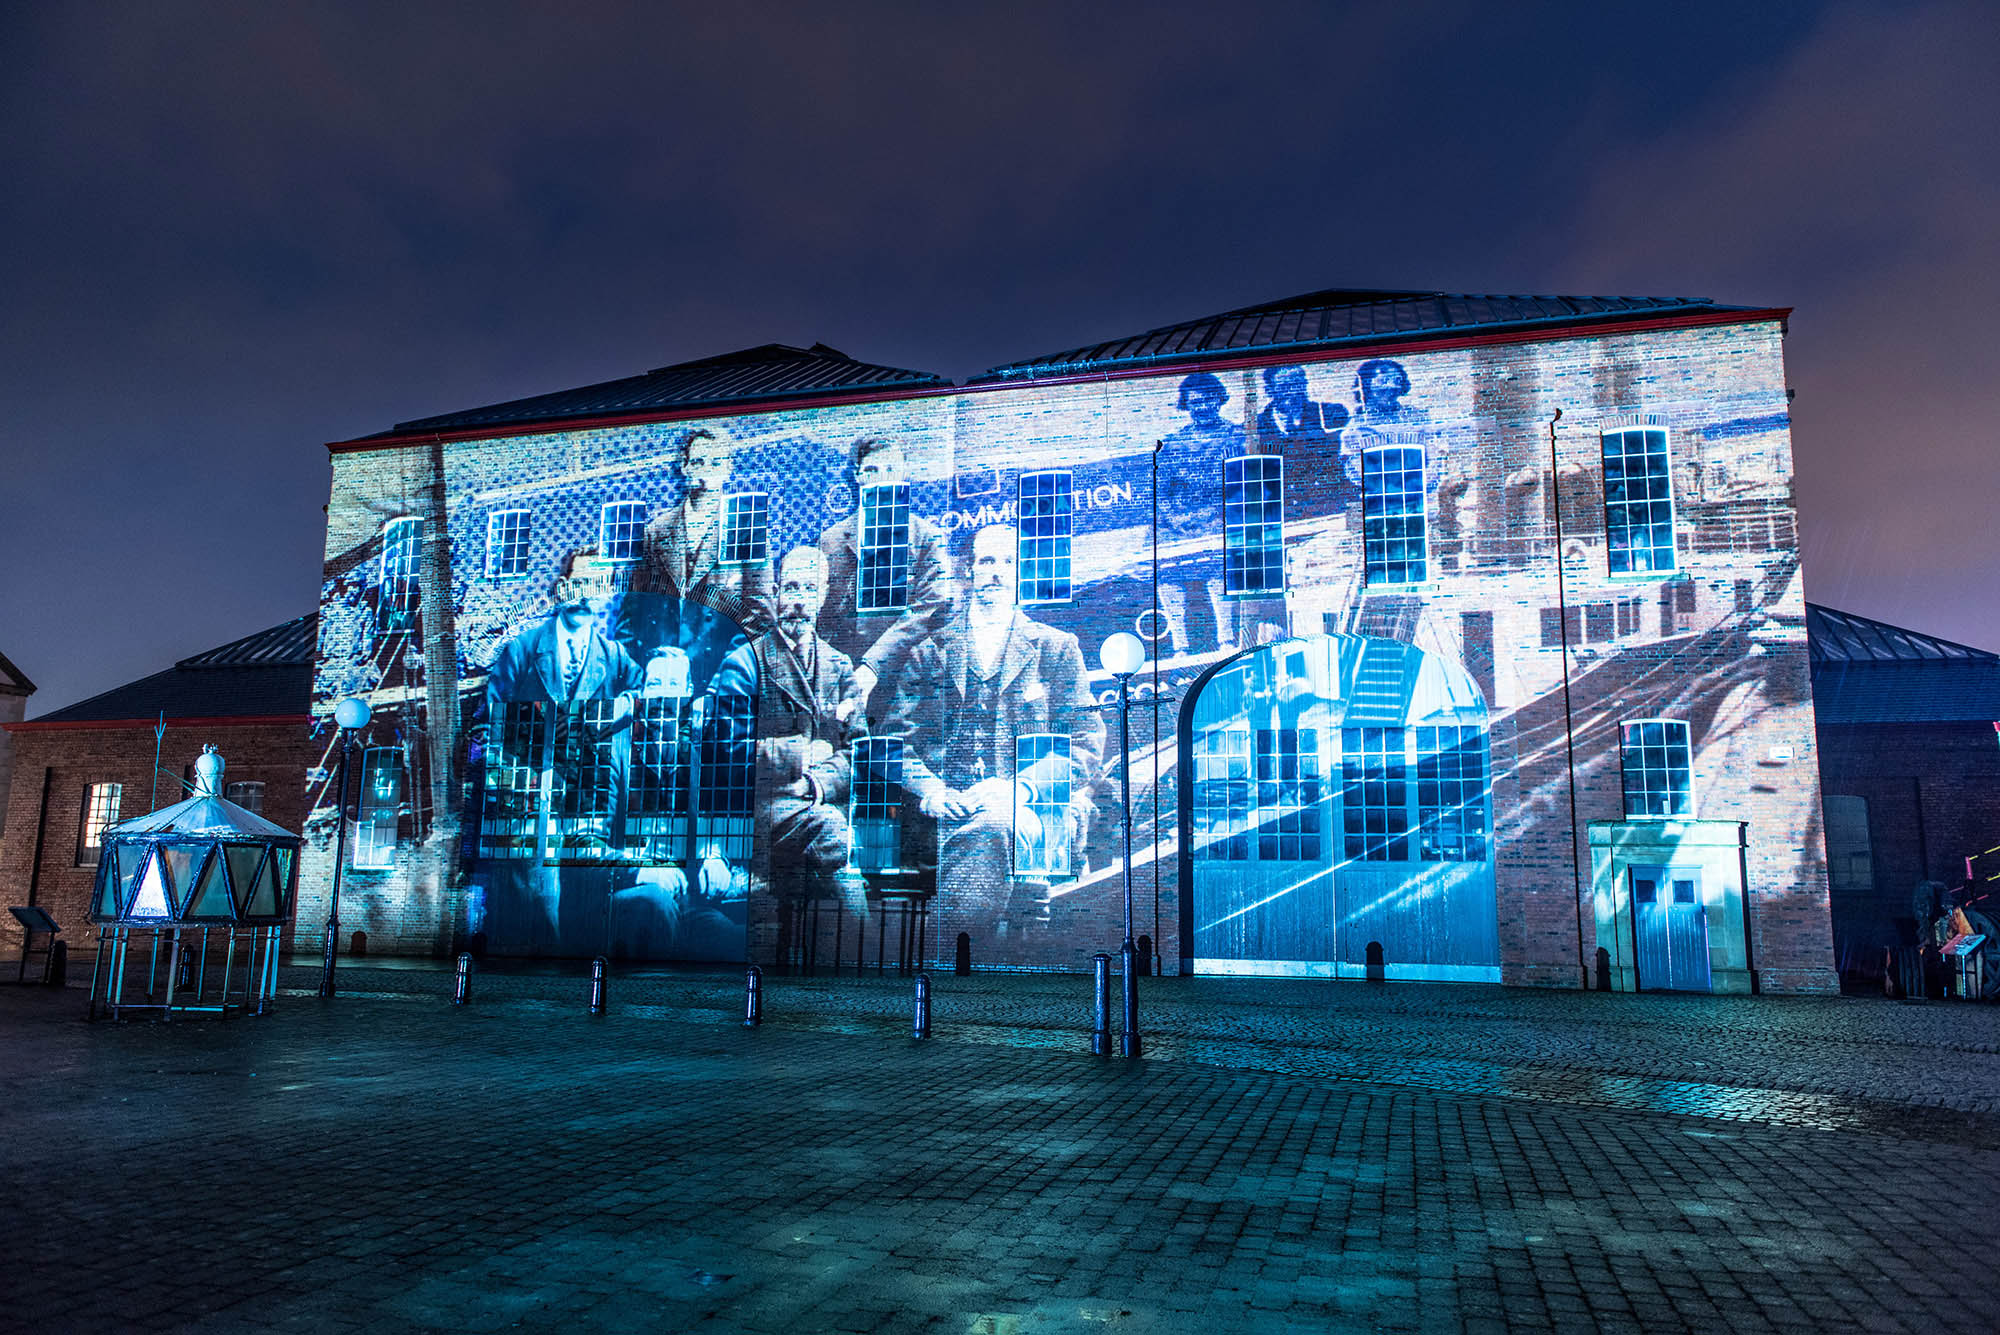 Illumination, Irvine Maritime Museum projection show, archive footage